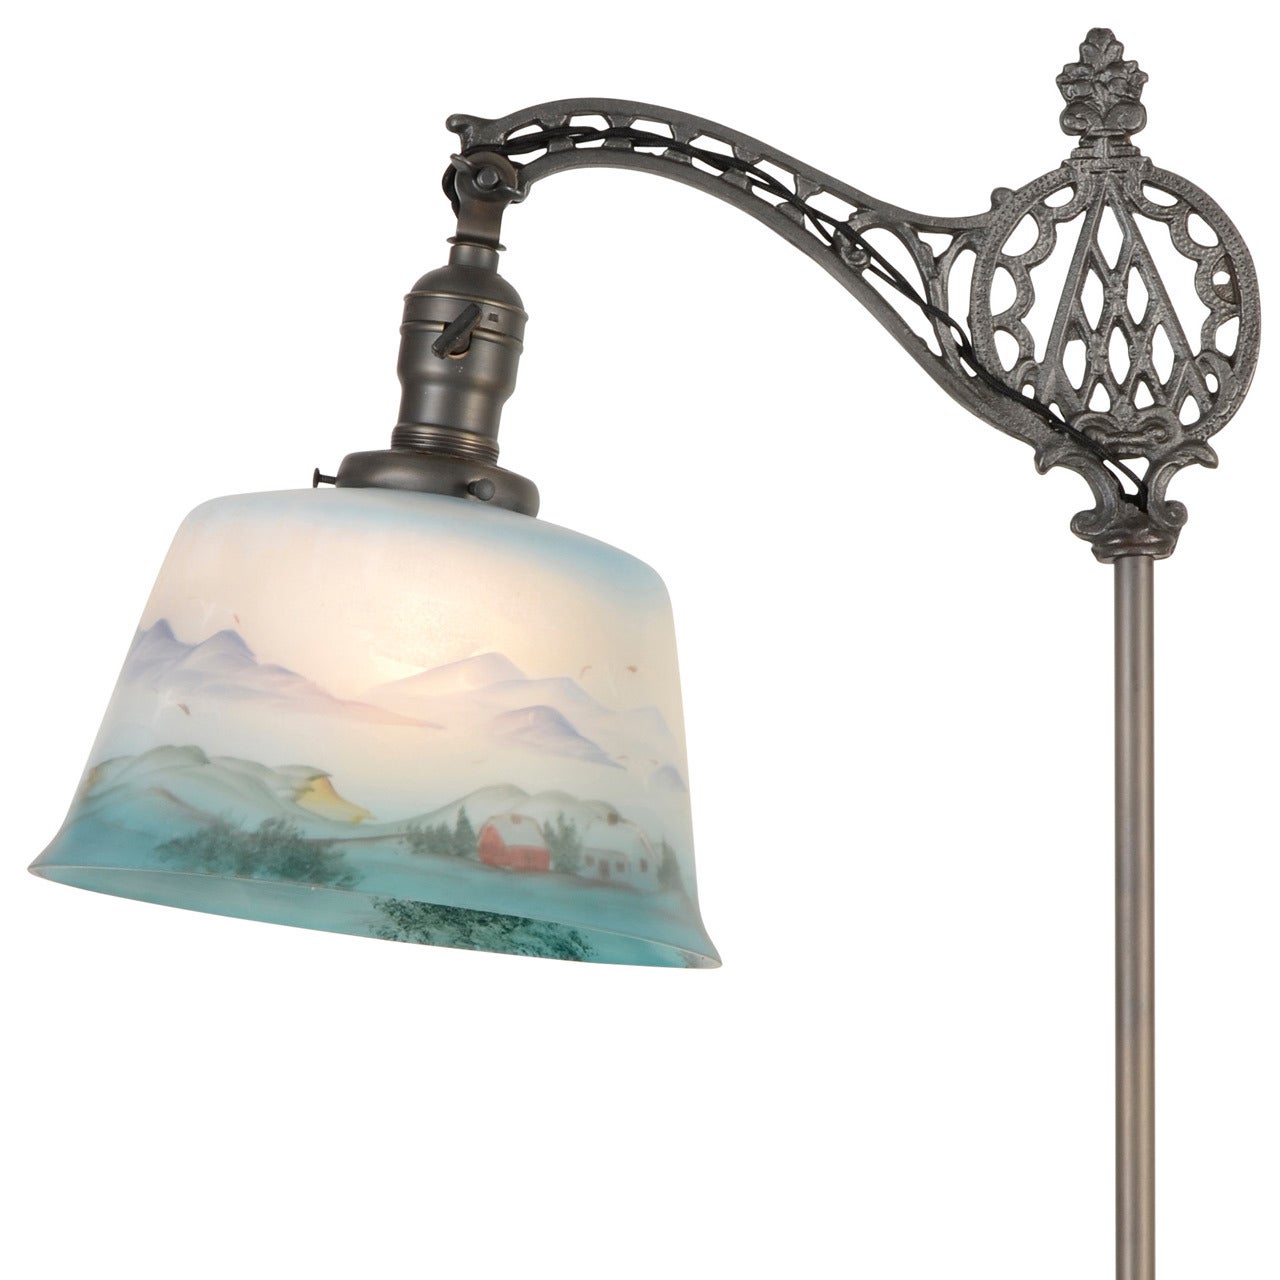 Ornate Bridge Floor Lamp with Reverse Painted Shade